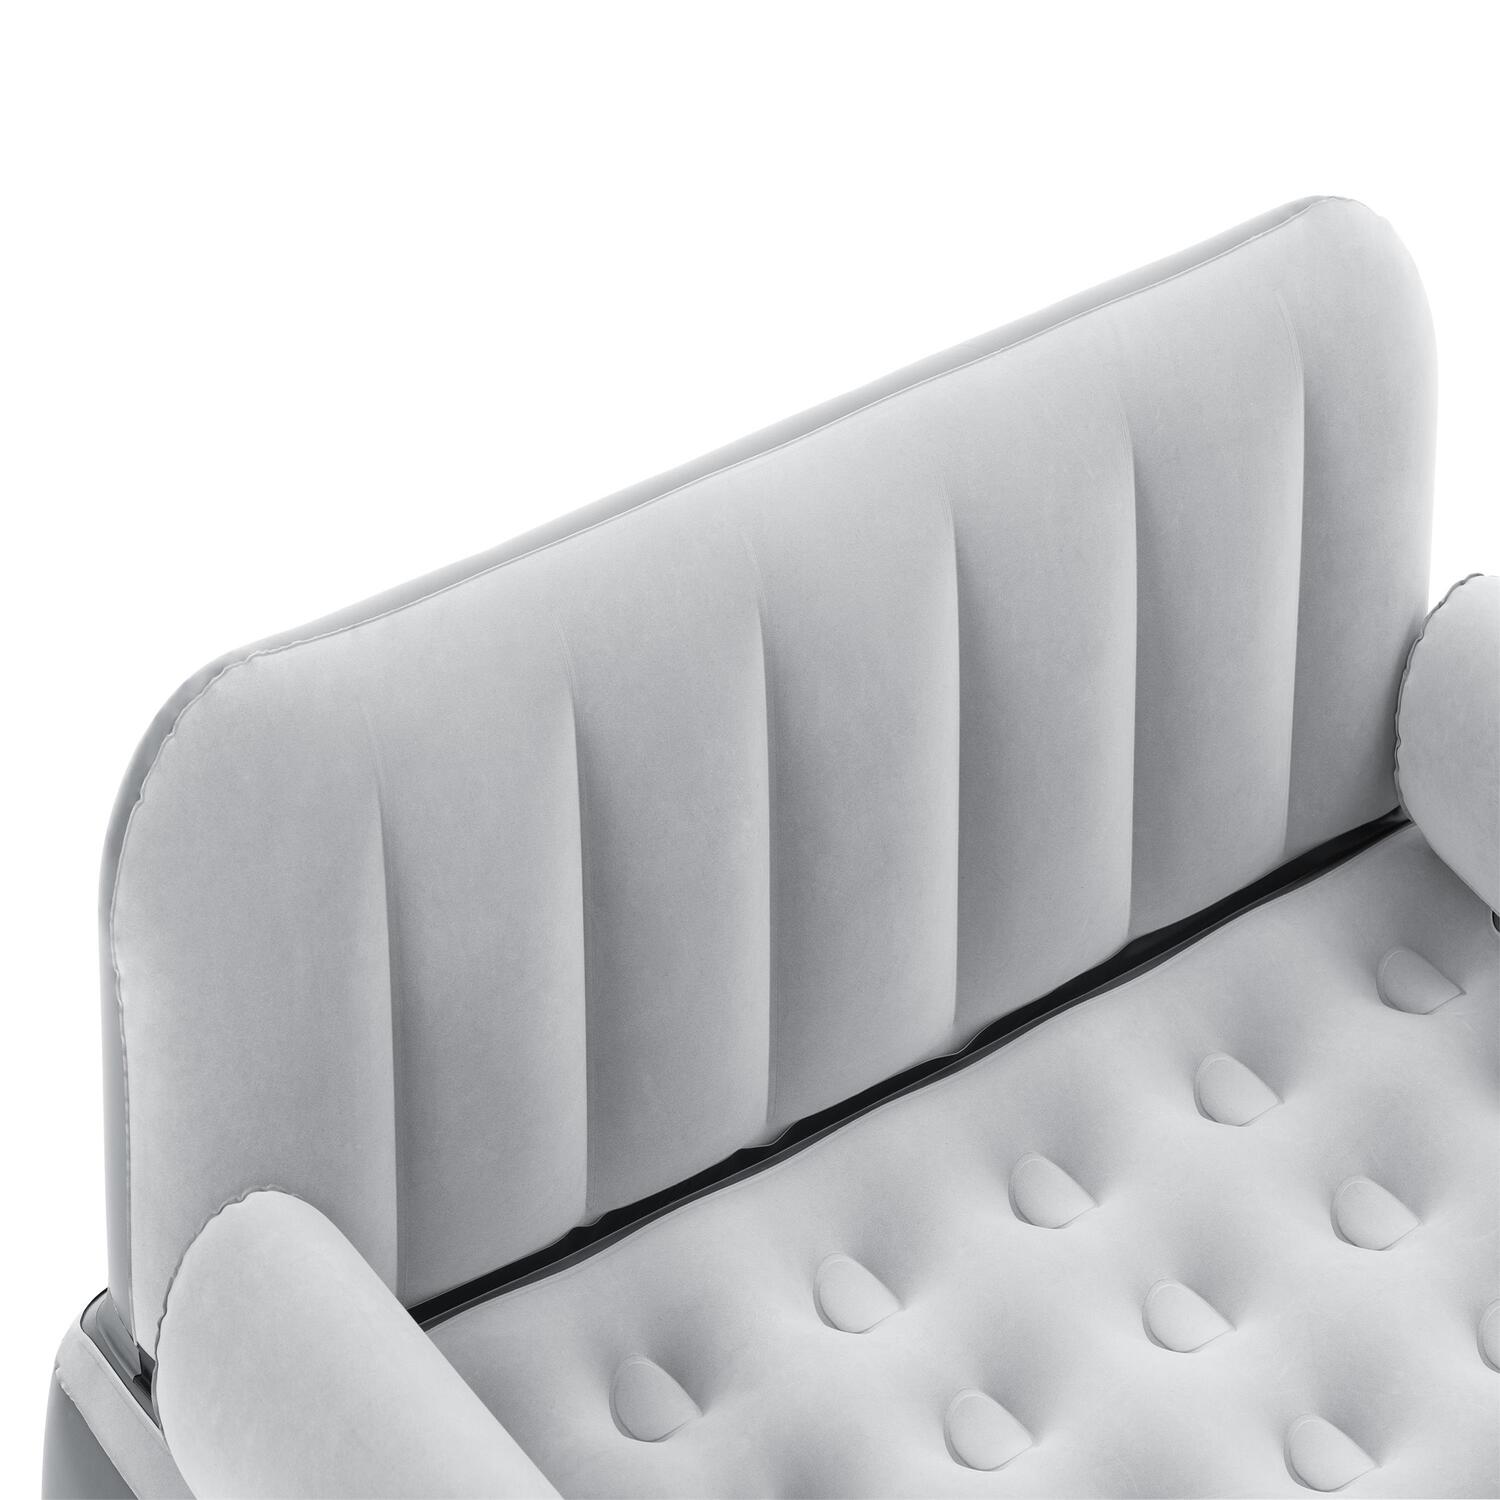 Sofa Cama Inflable Con Inflador Incorporado – Globalmarket